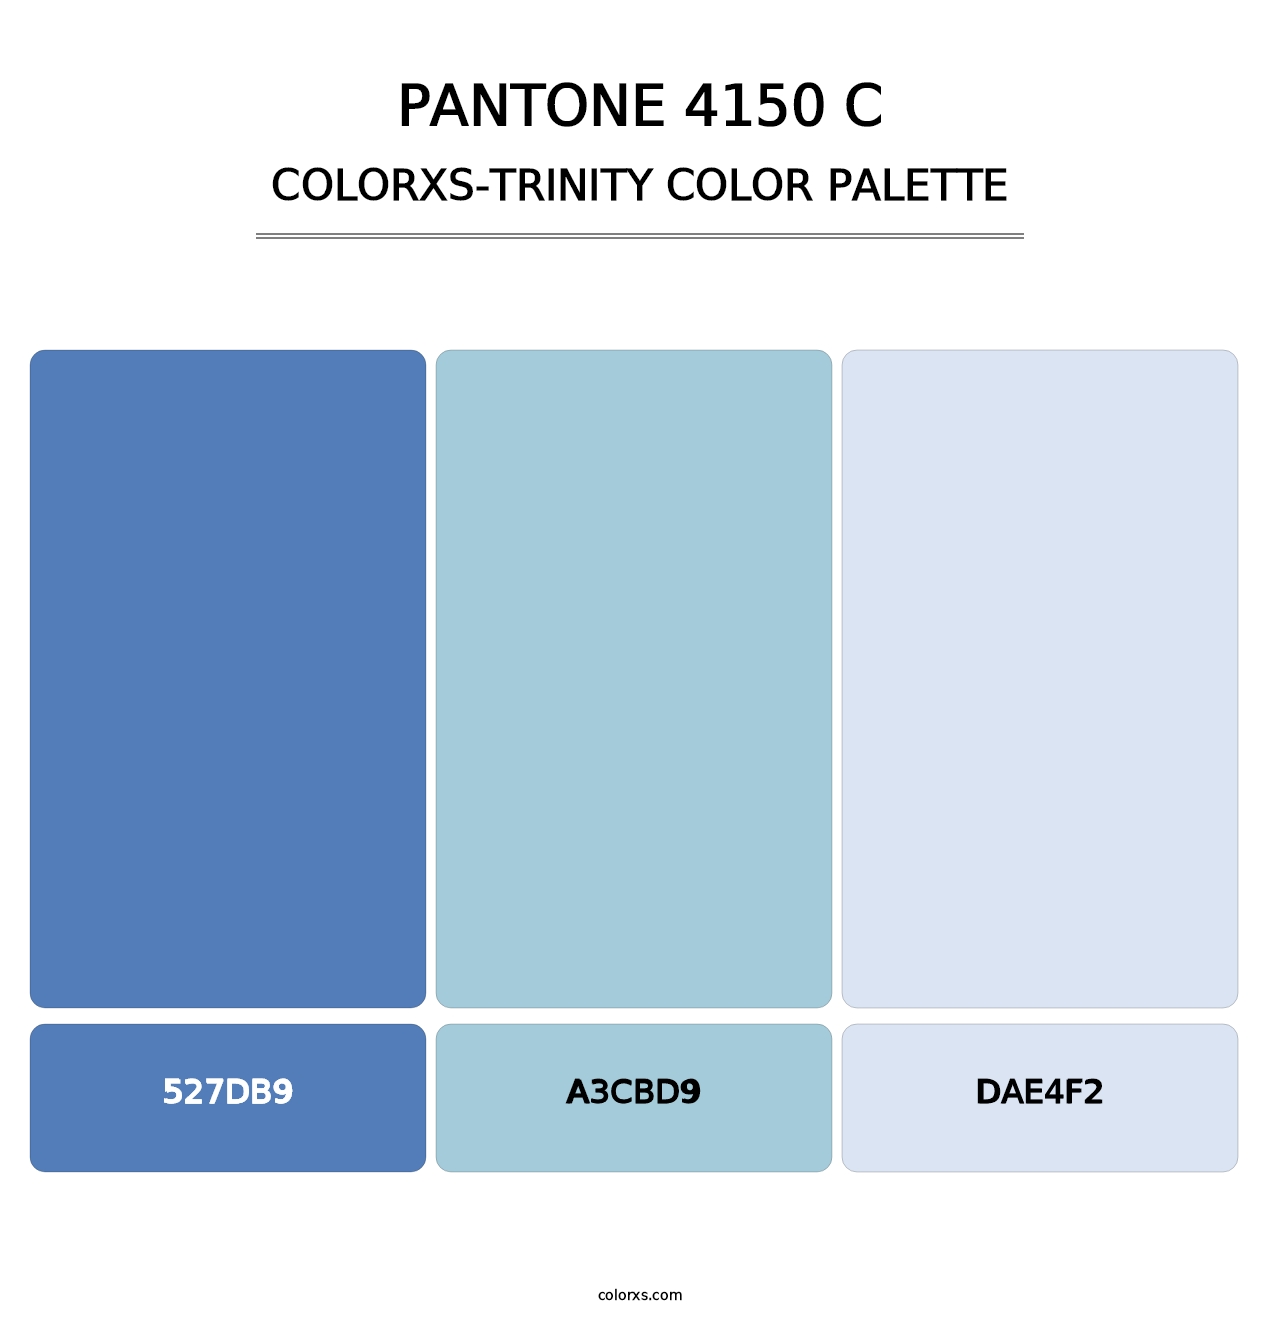 PANTONE 4150 C - Colorxs Trinity Palette